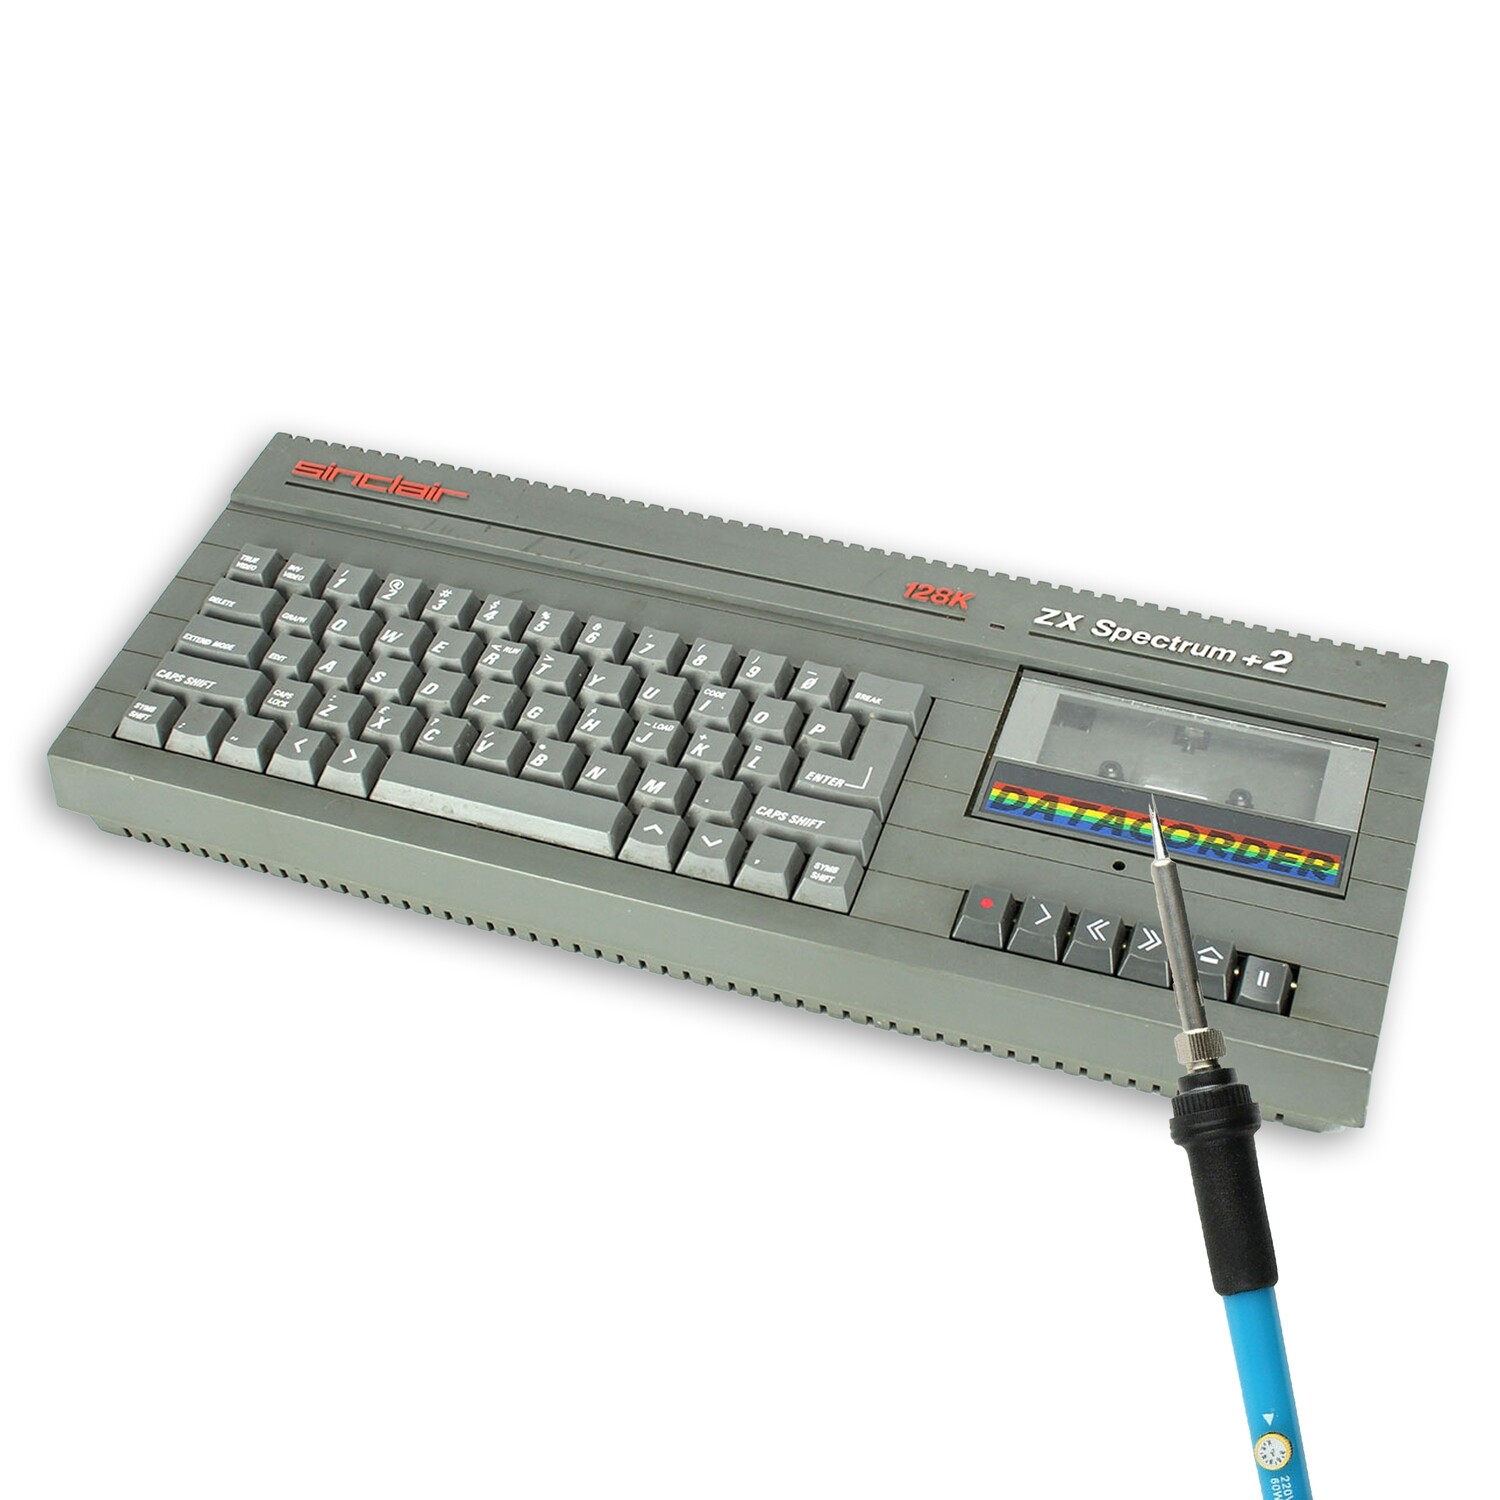 ZX Spectrum 128 +2: Repair Service